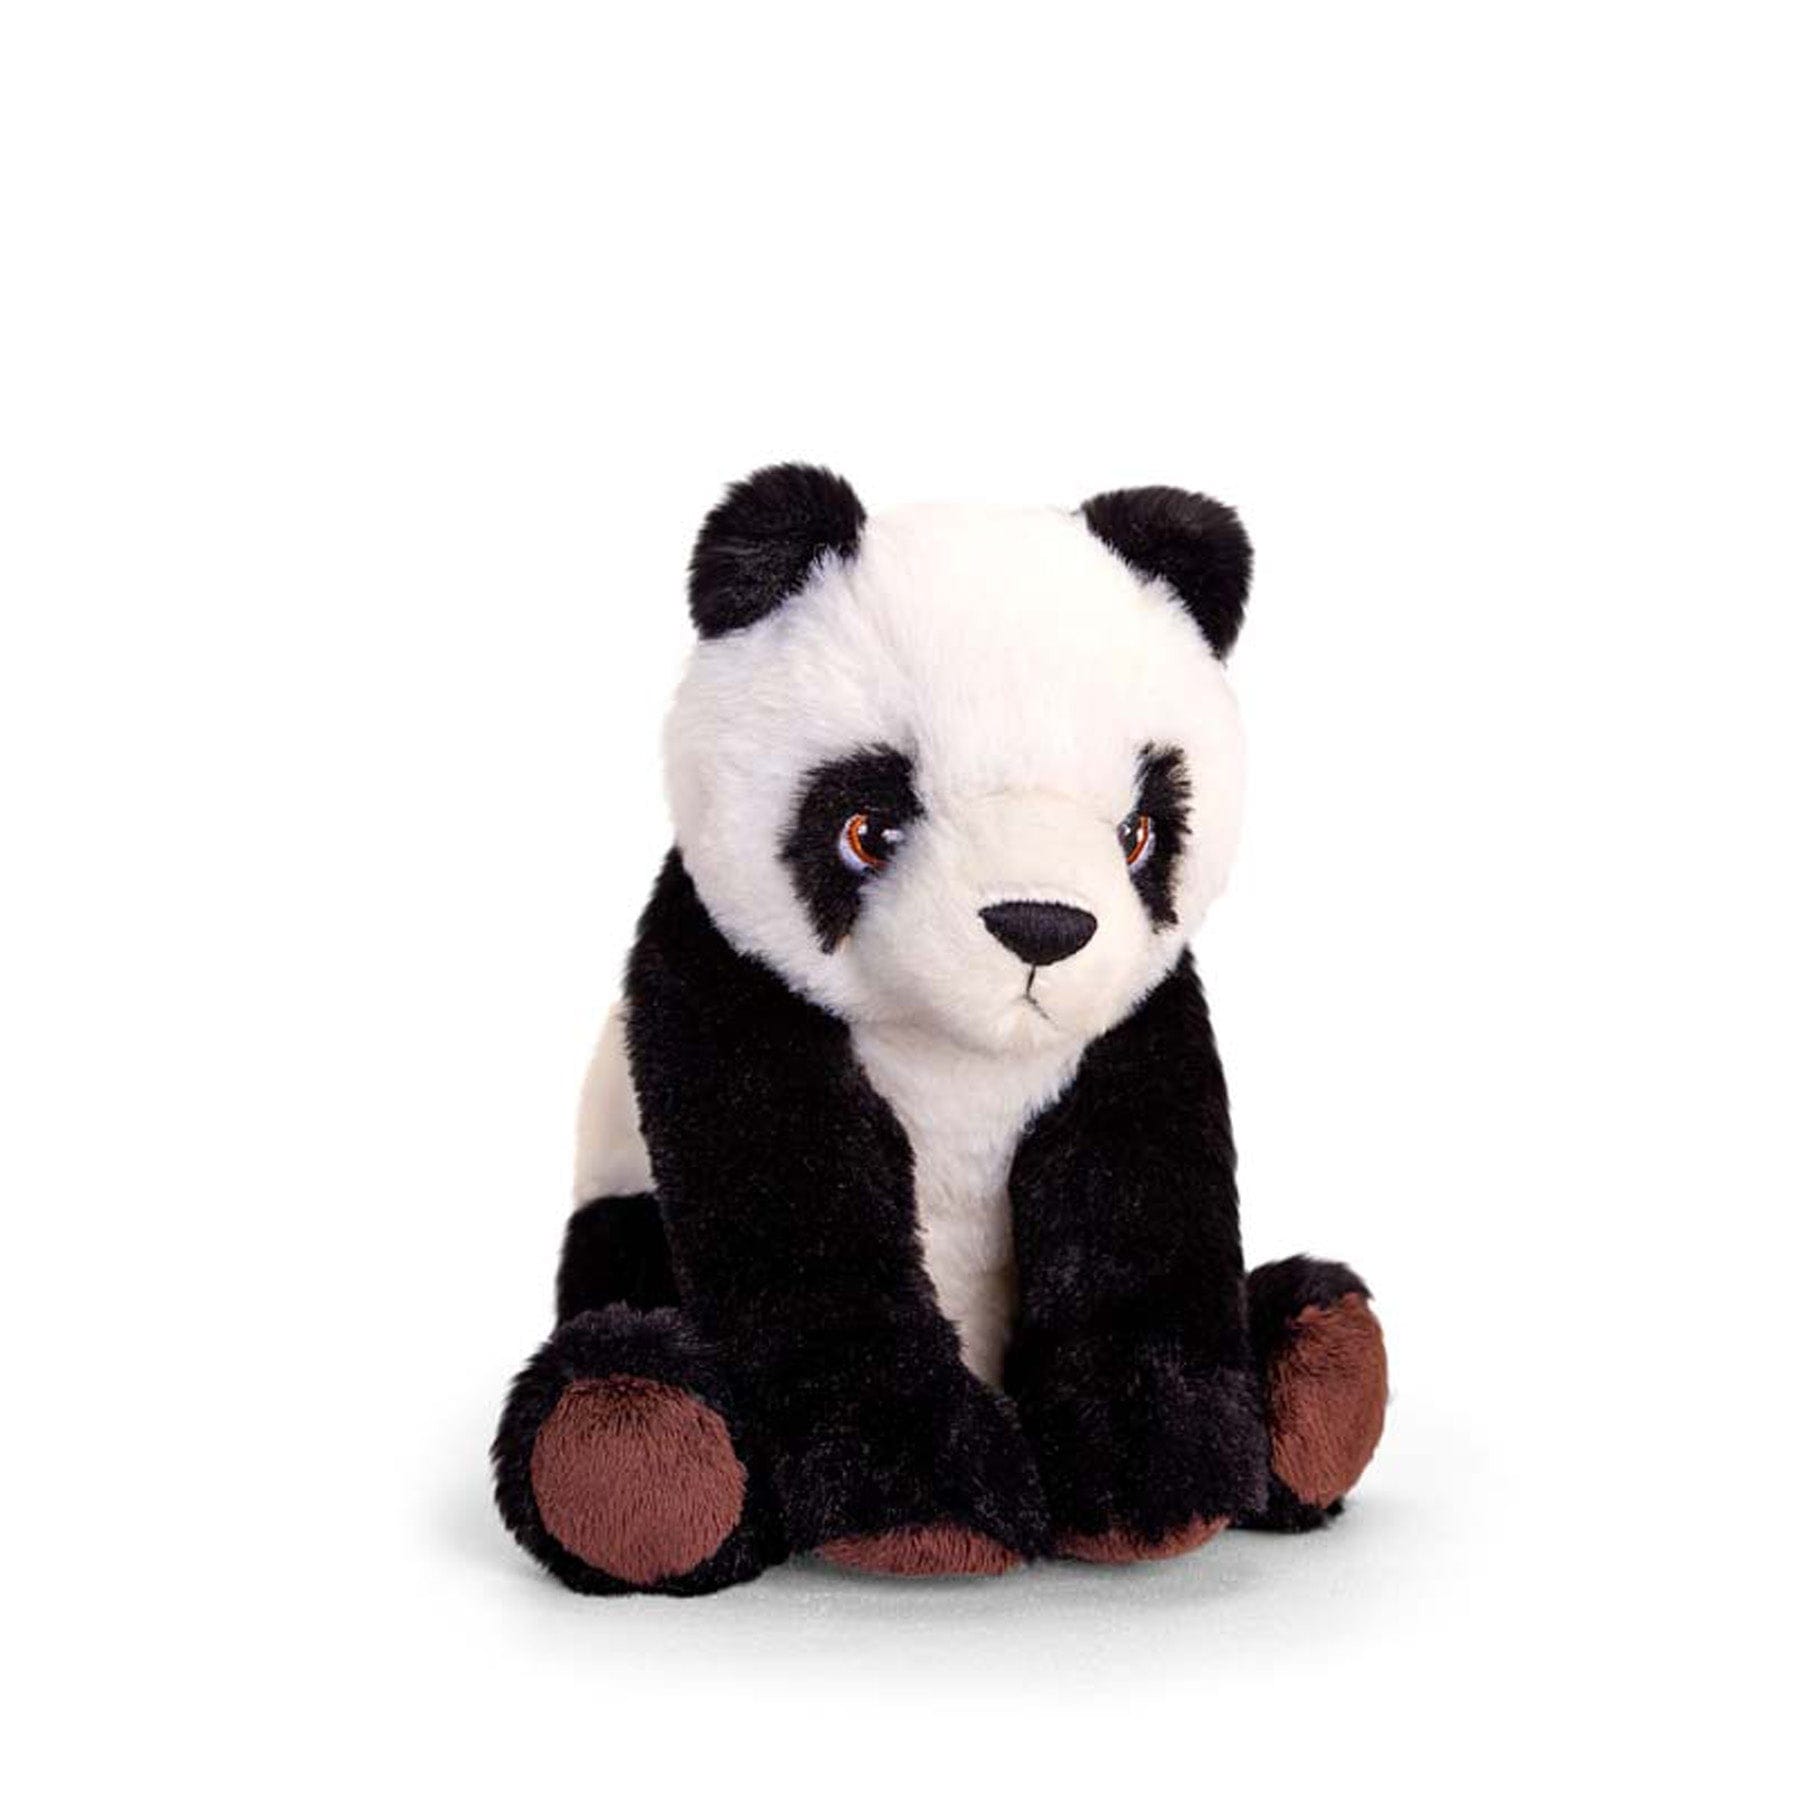 Plush panda bear toy sitting isolated on white background, soft stuffed animal for children, black and white cute panda plushie